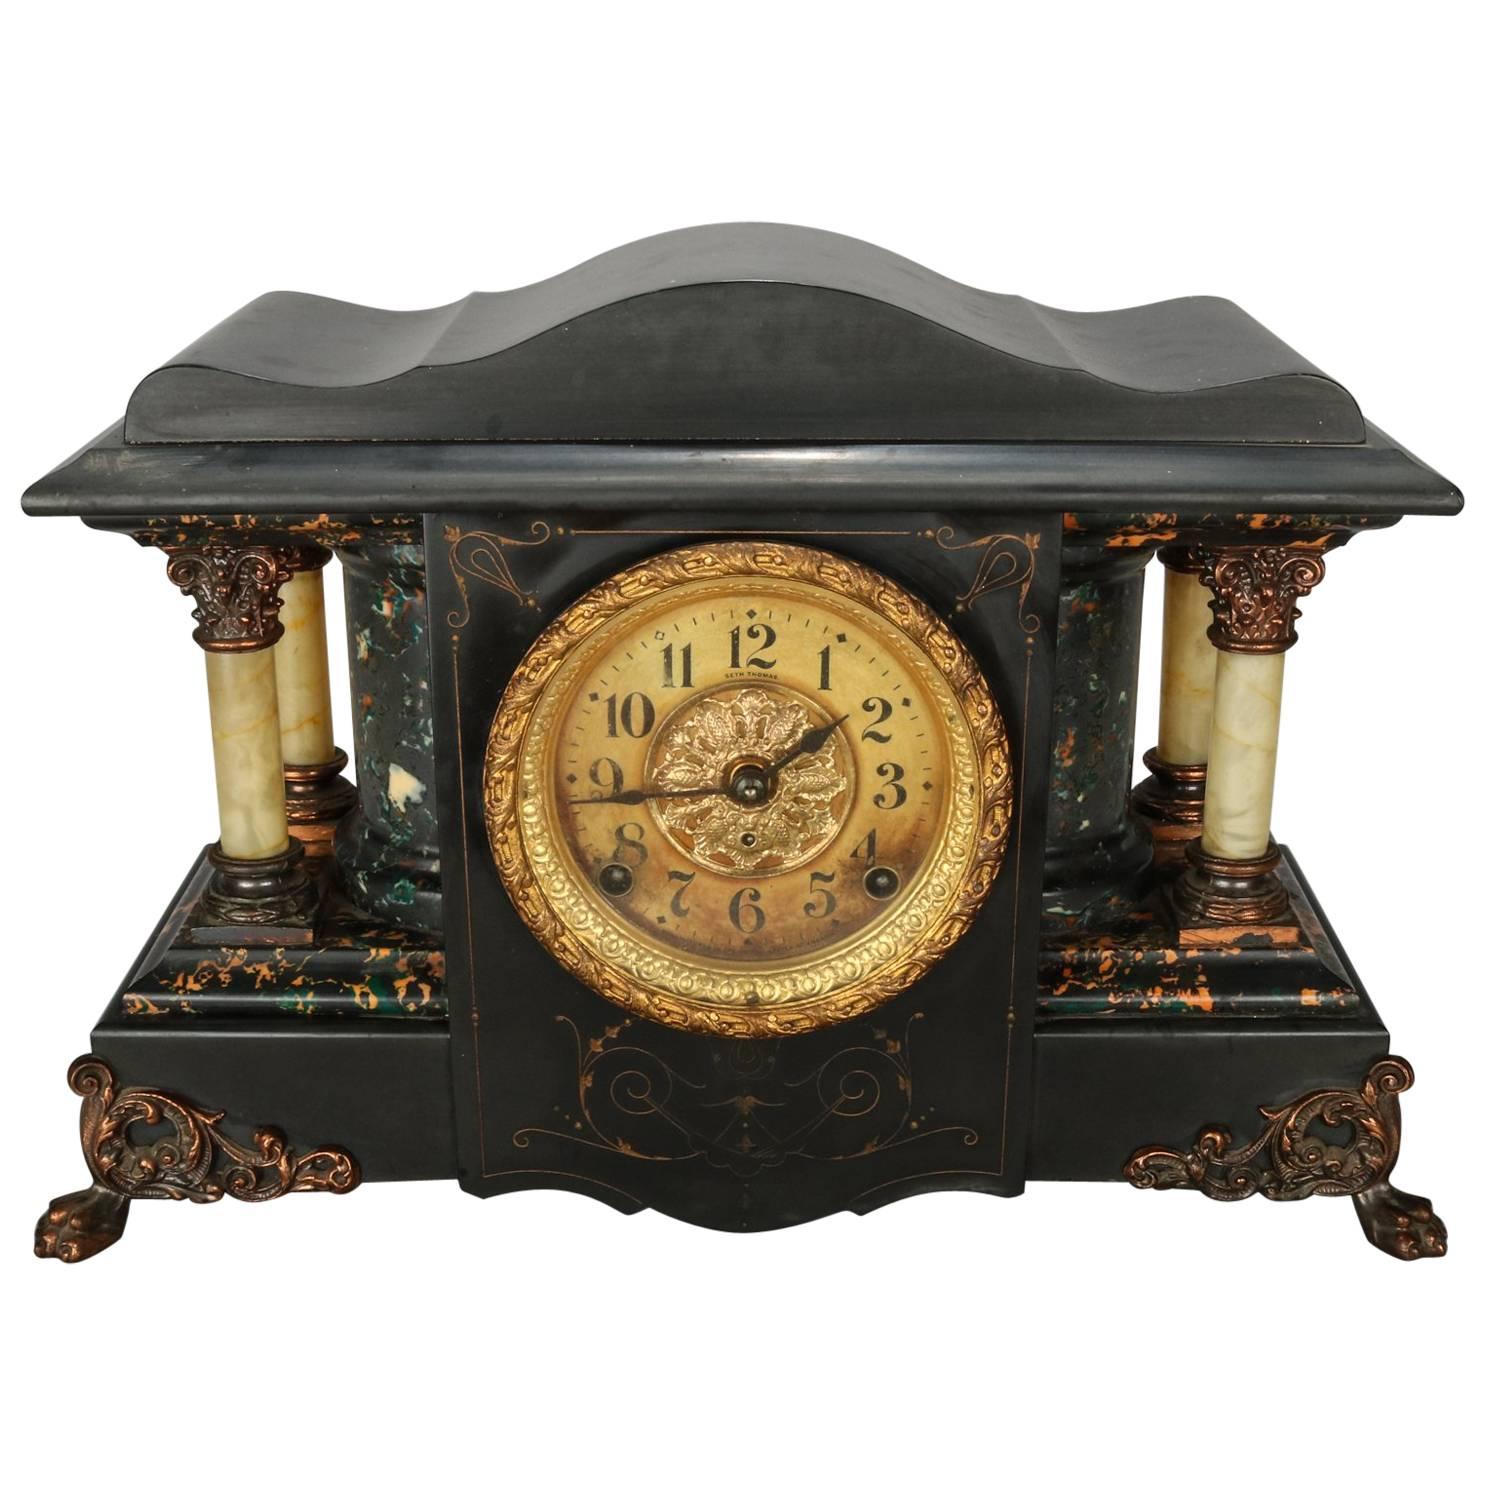 Seth Thomas mantle/mantel clock feet #1 Metal furniture decorations Set of 4 